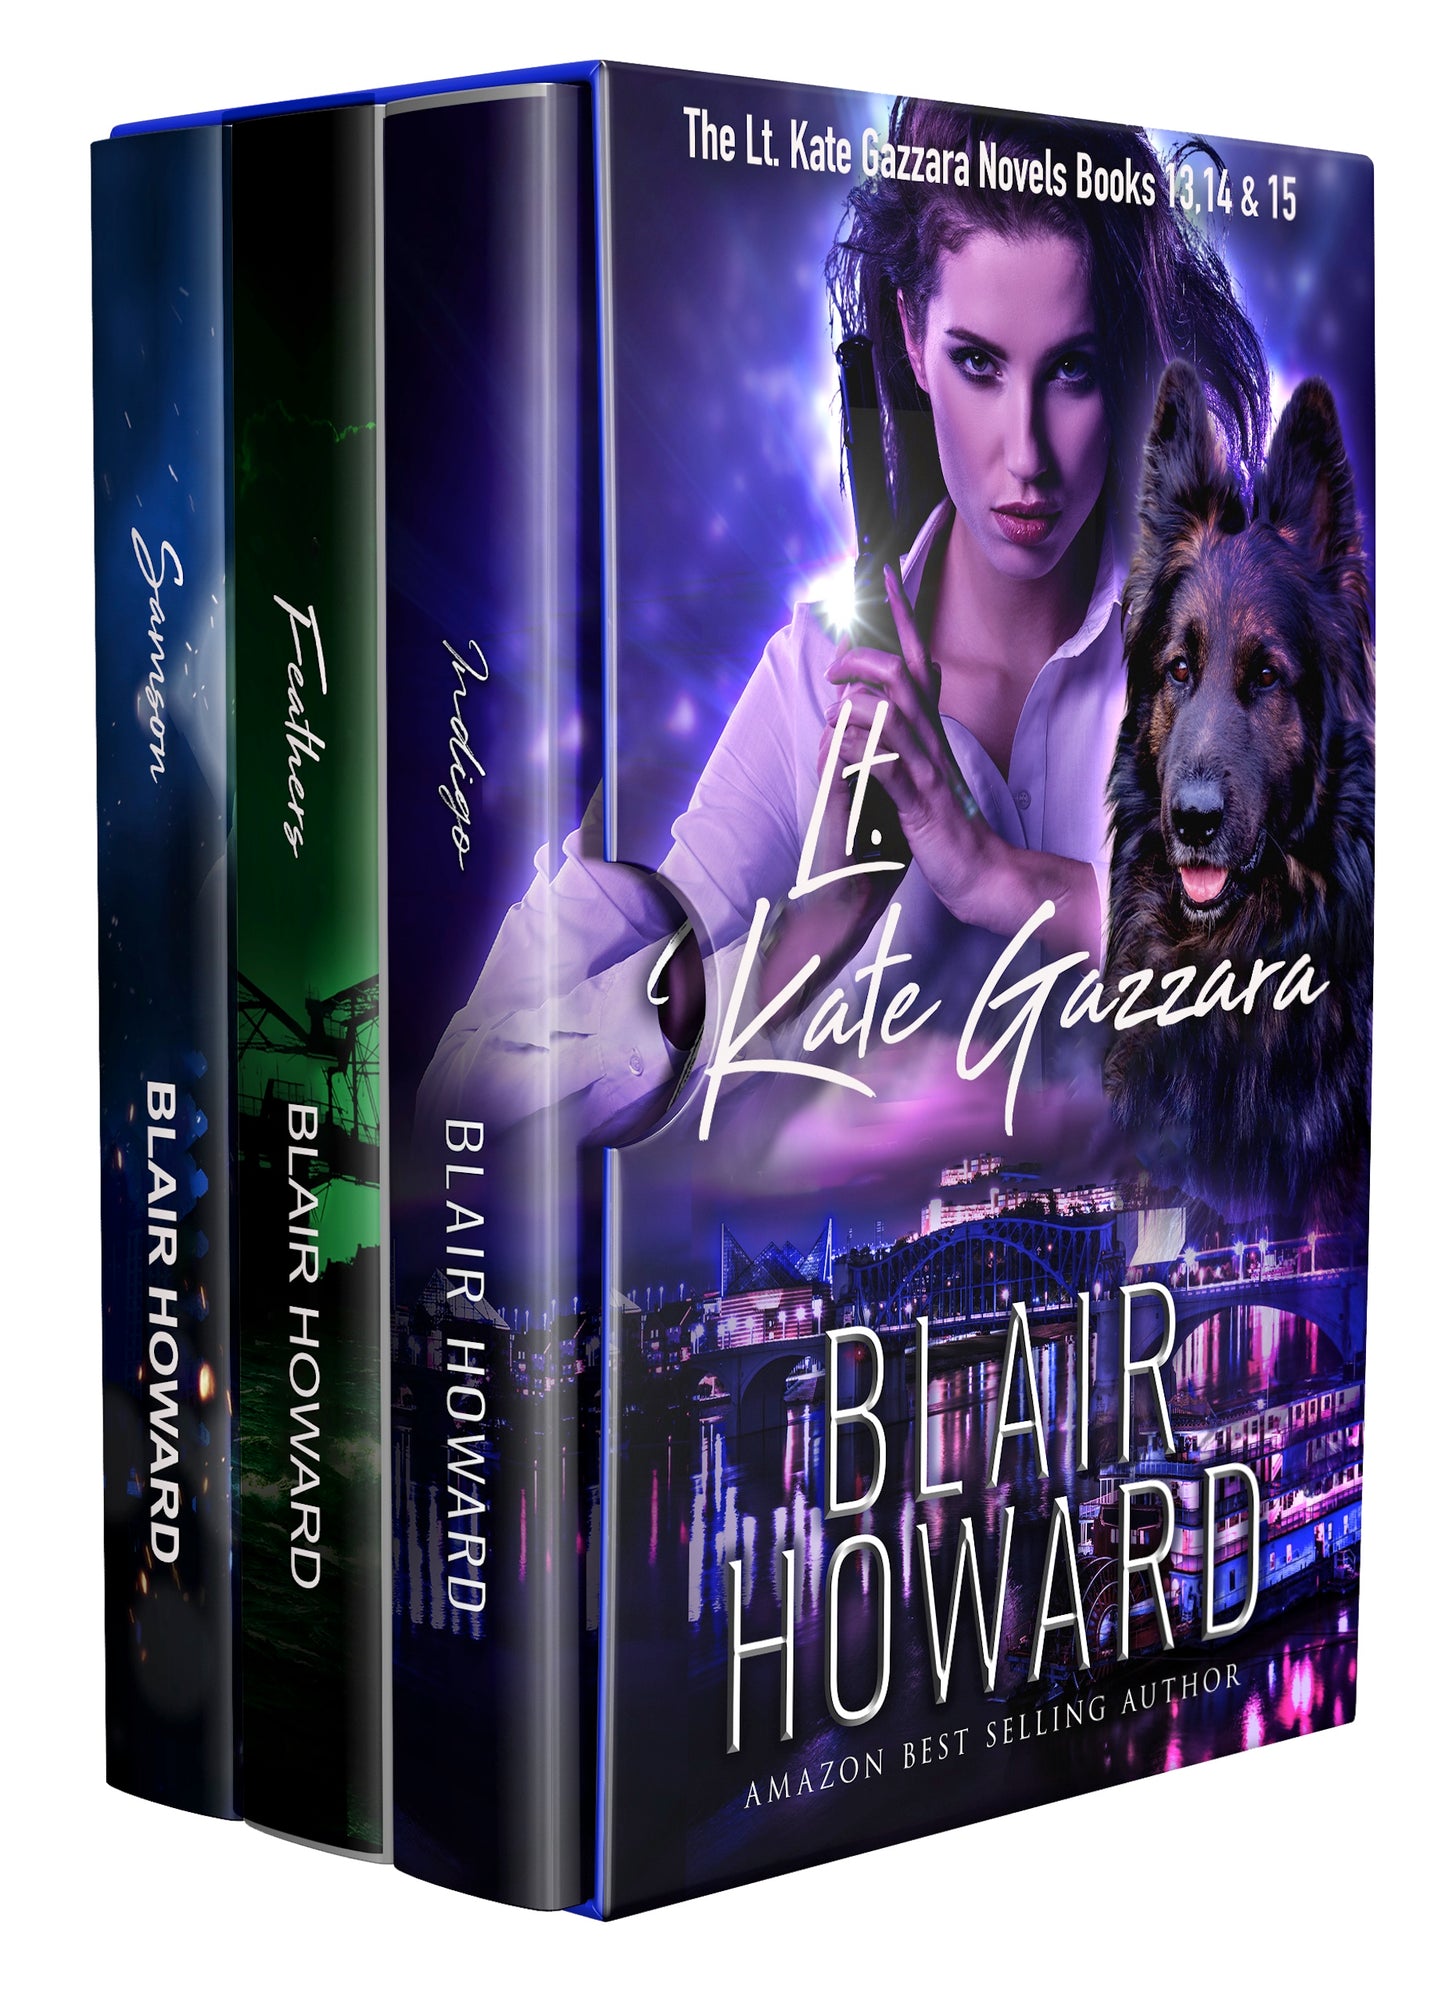 The Lt. Kate Gazzara Series - eBooks 13 - 15